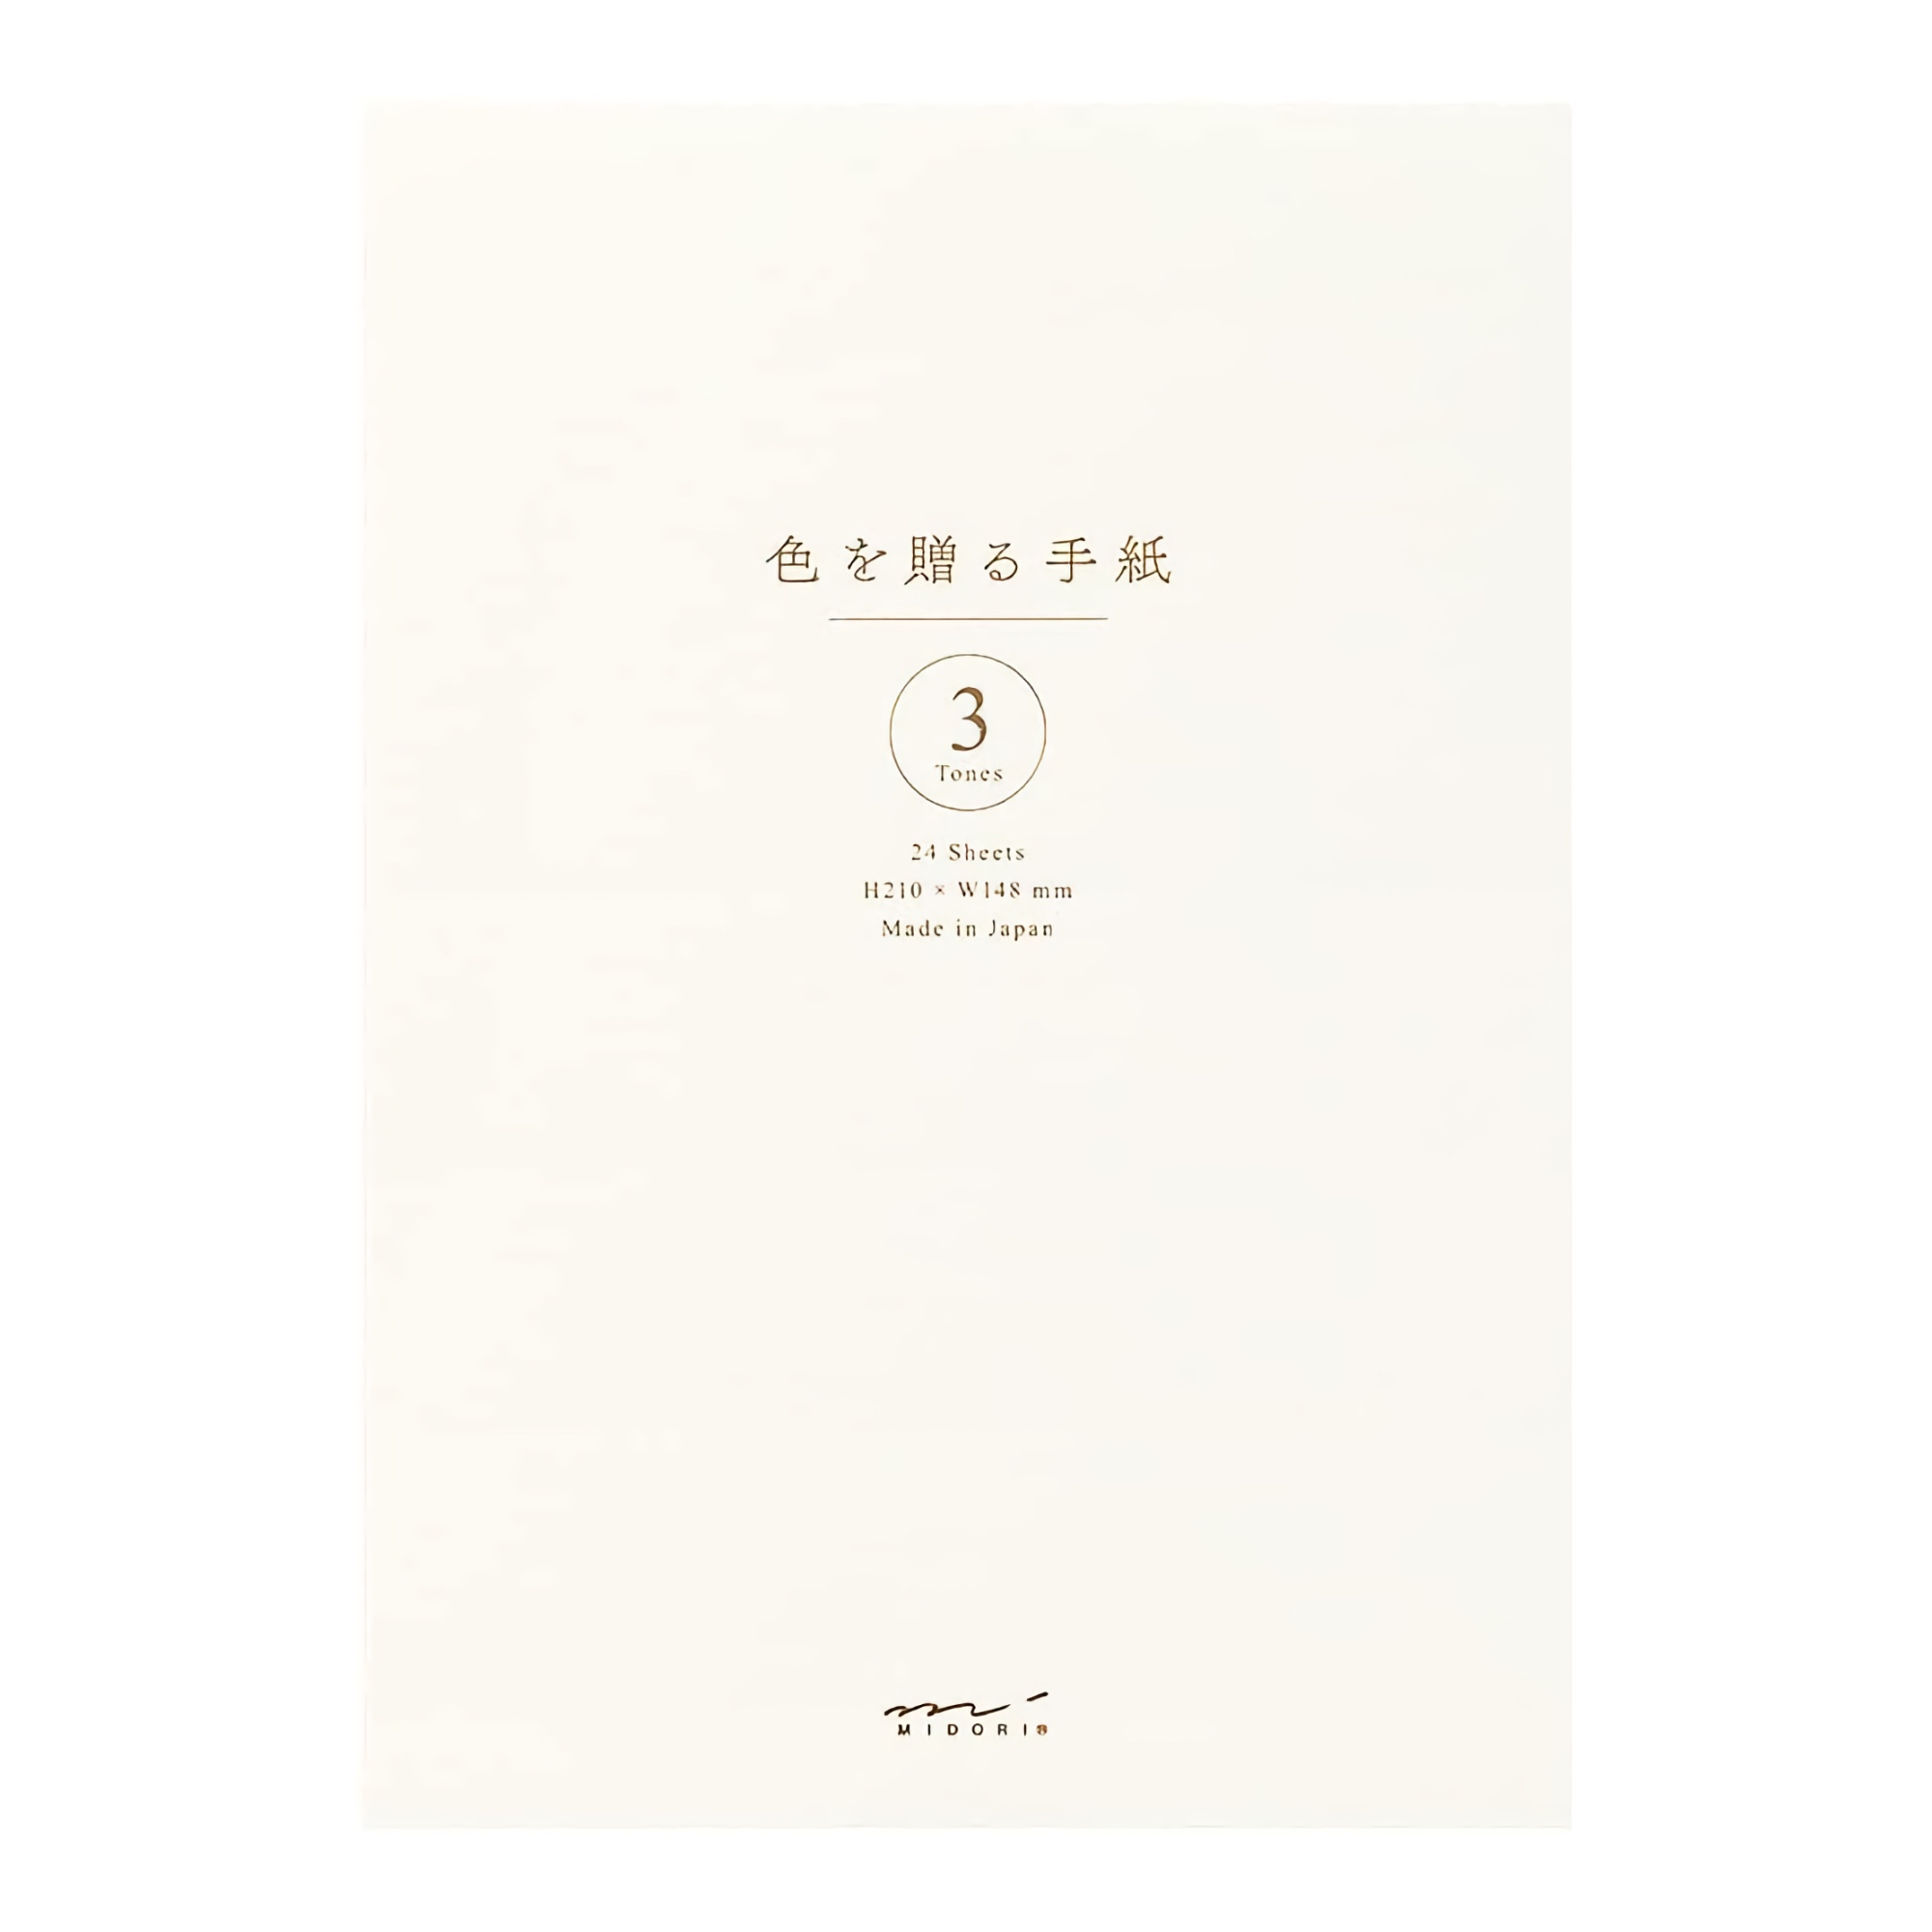 Midori Letterpad A5 Giving a Color White